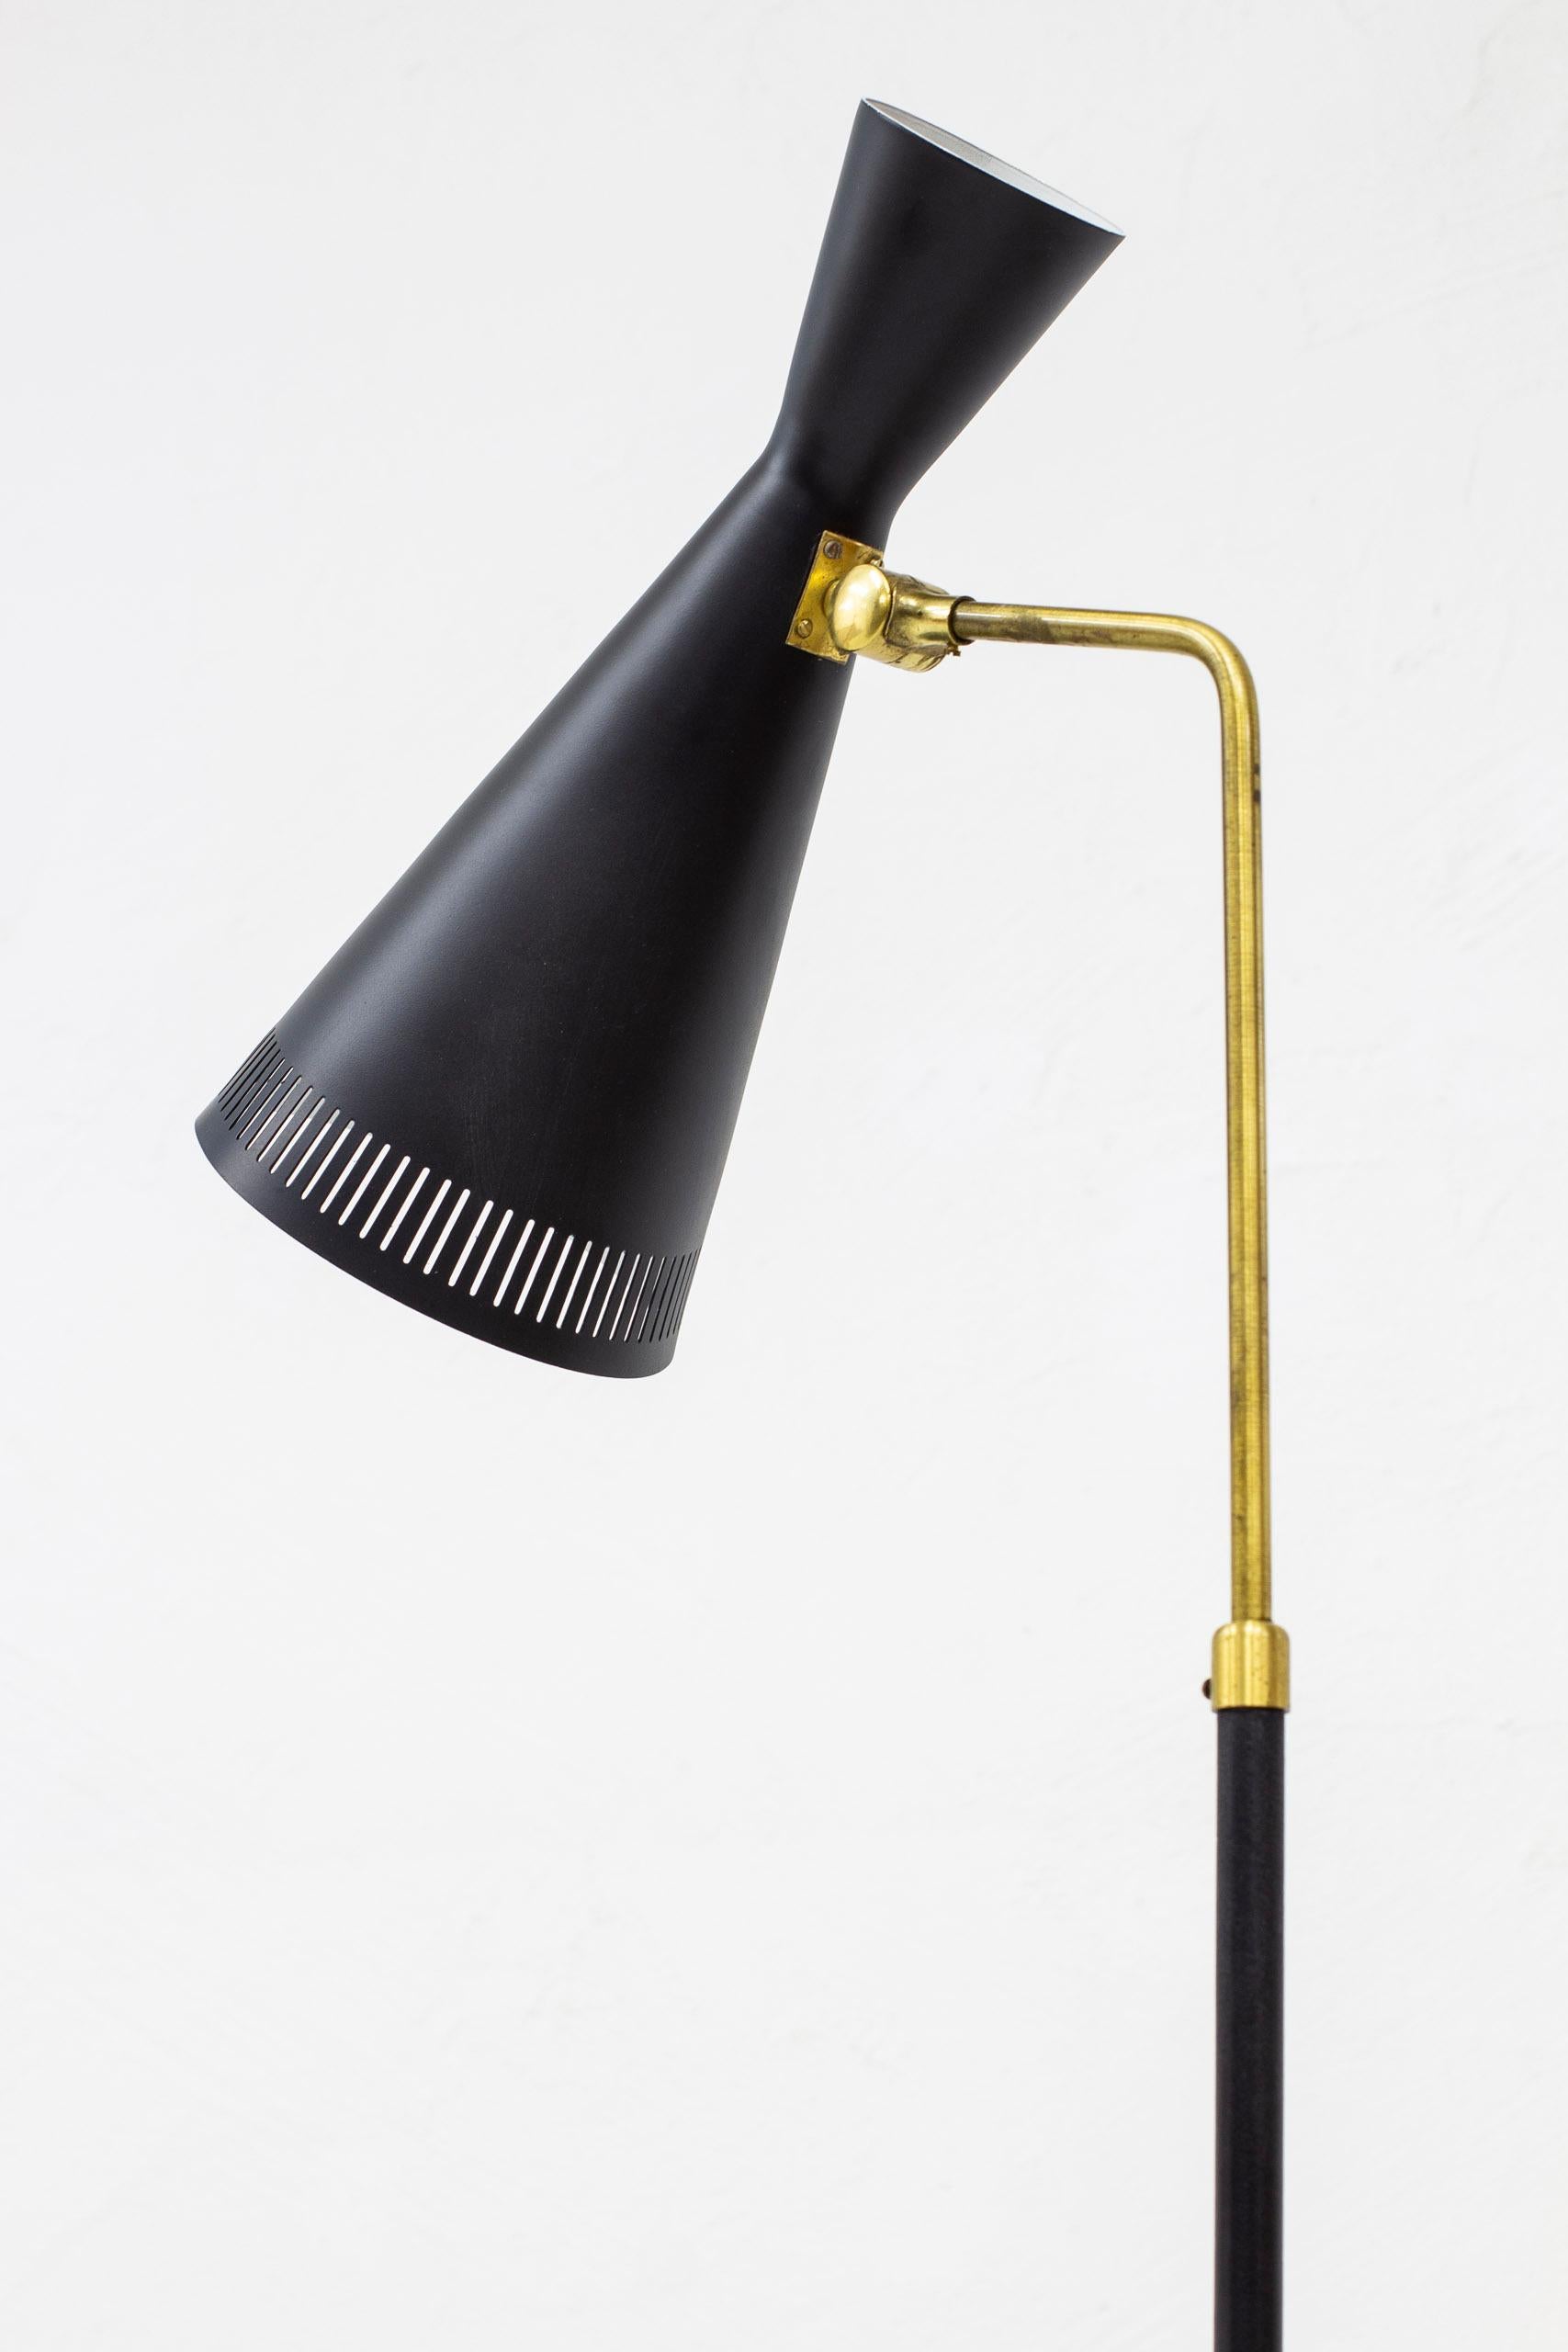 Scandinavian Modern Floor Lamp in Brass and Black by Pagos, Sweden, 1950s